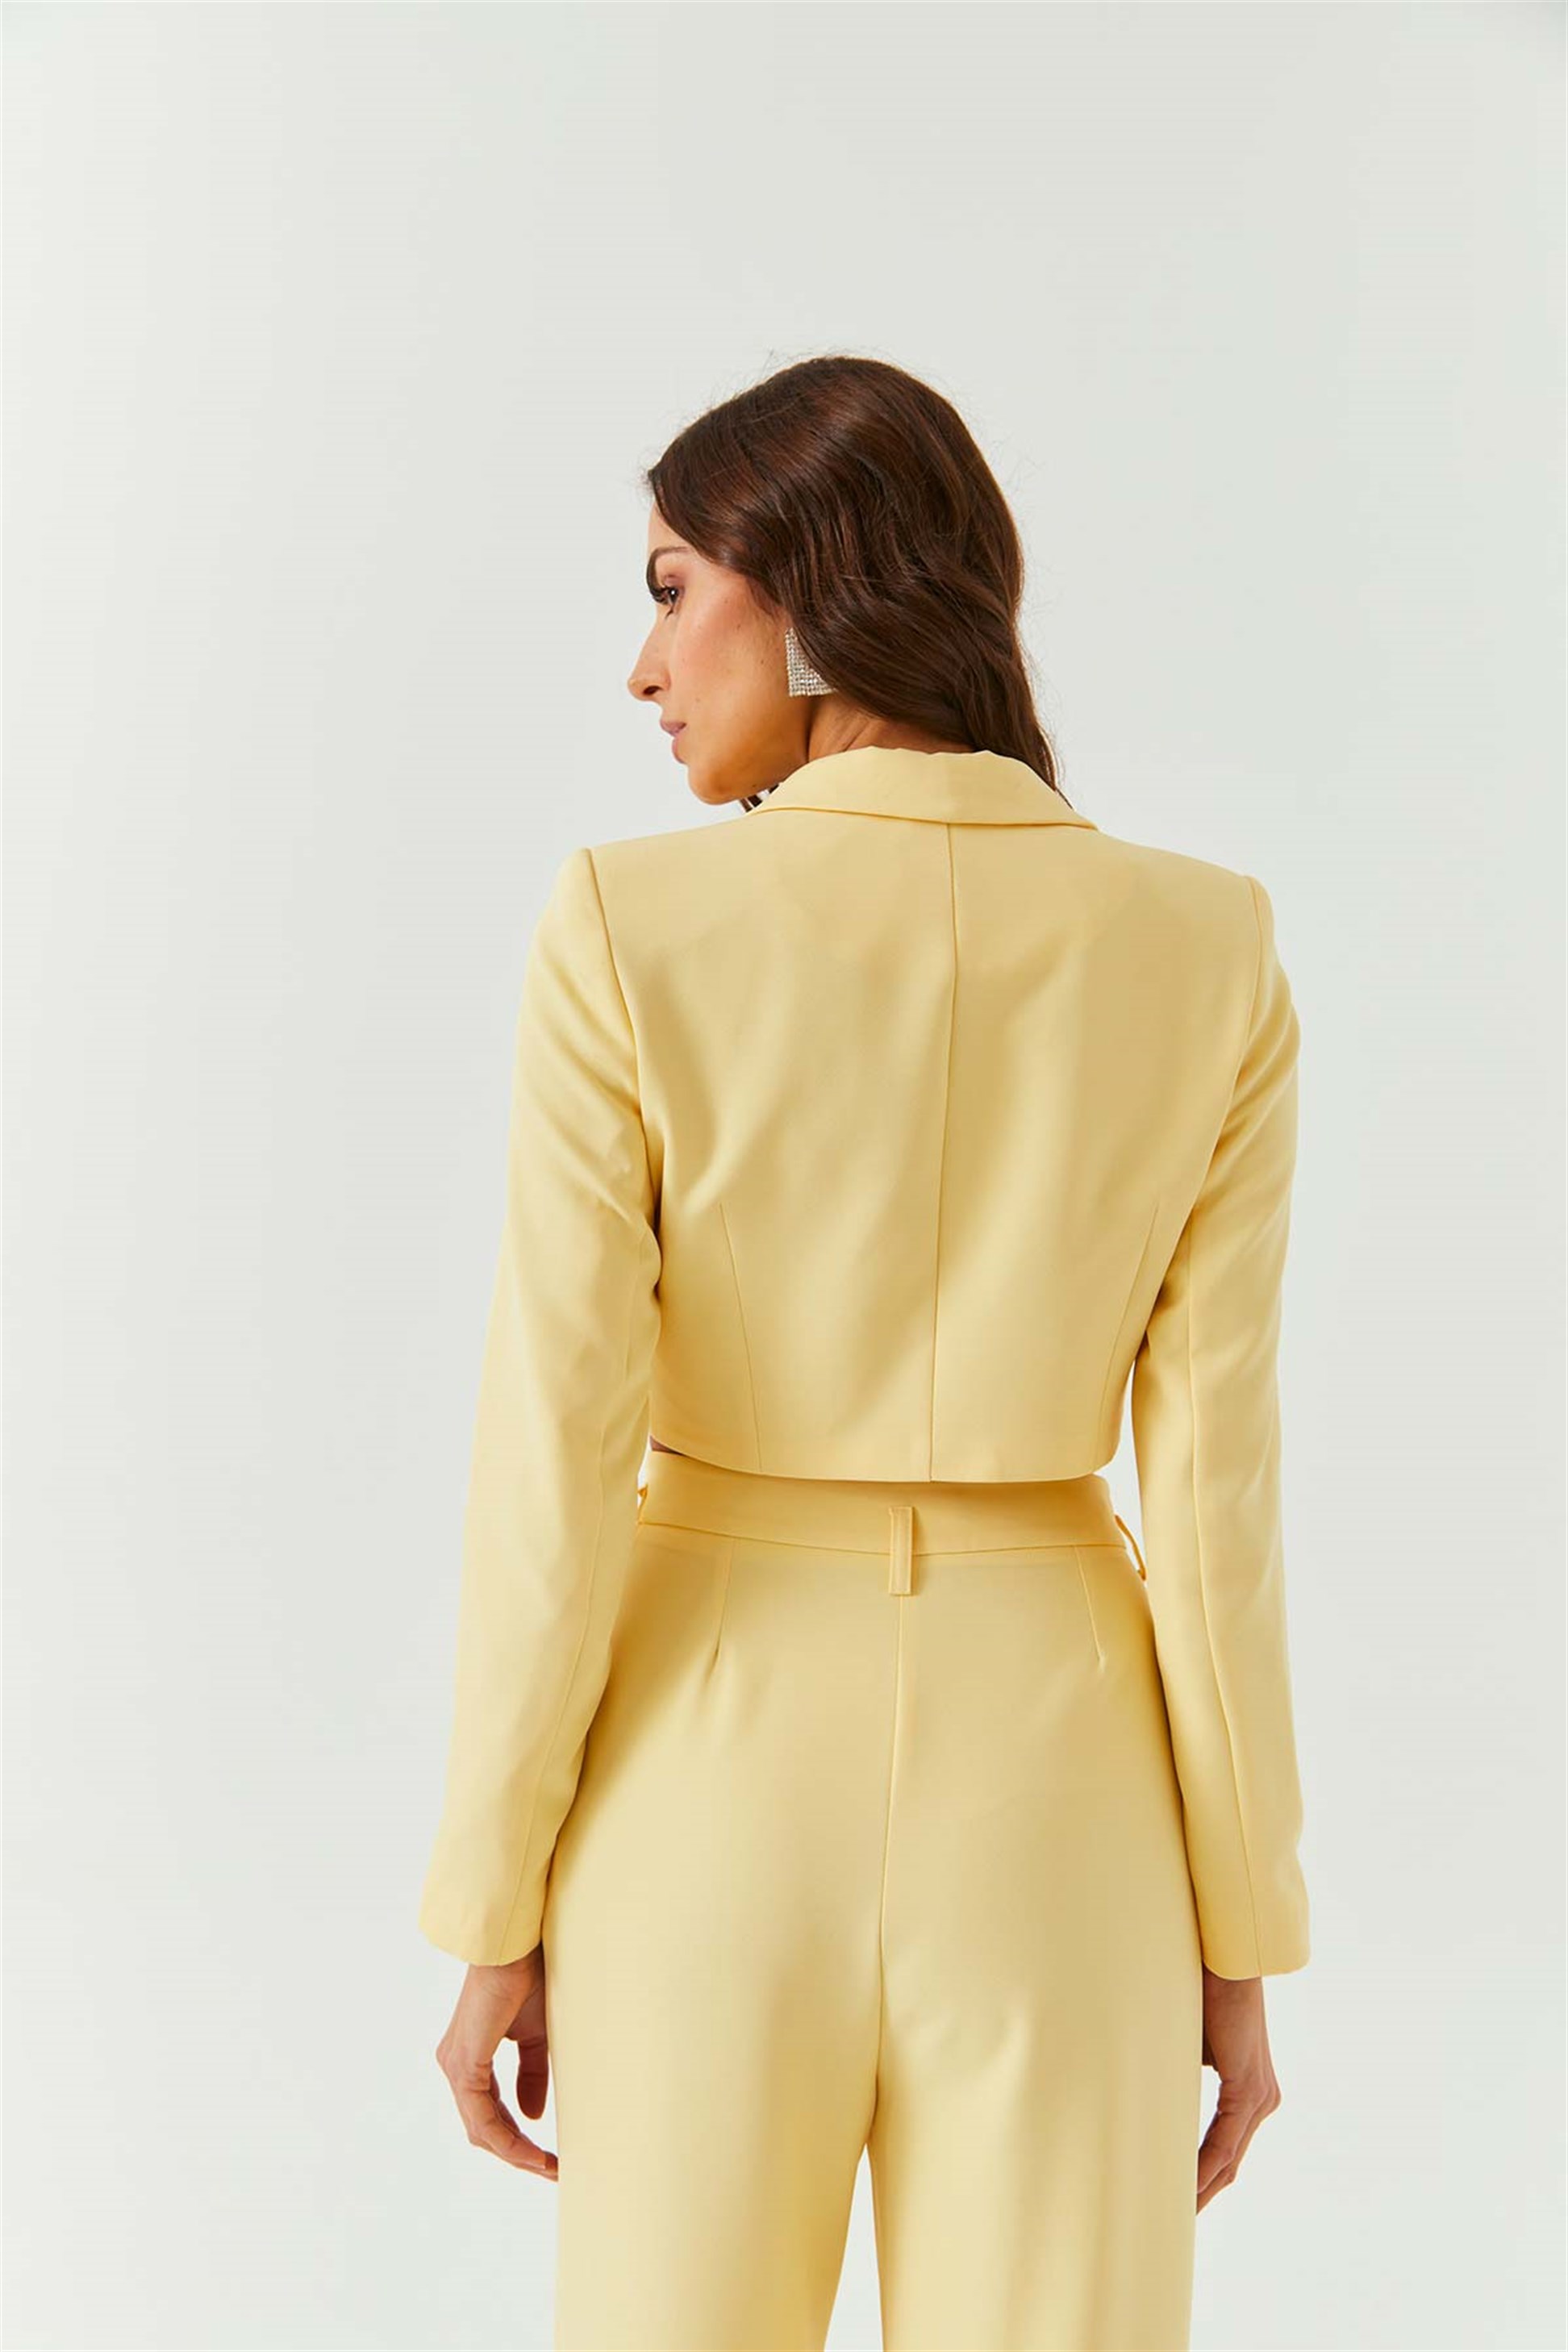 Single button woman short yellow jacket | Tuba Butik